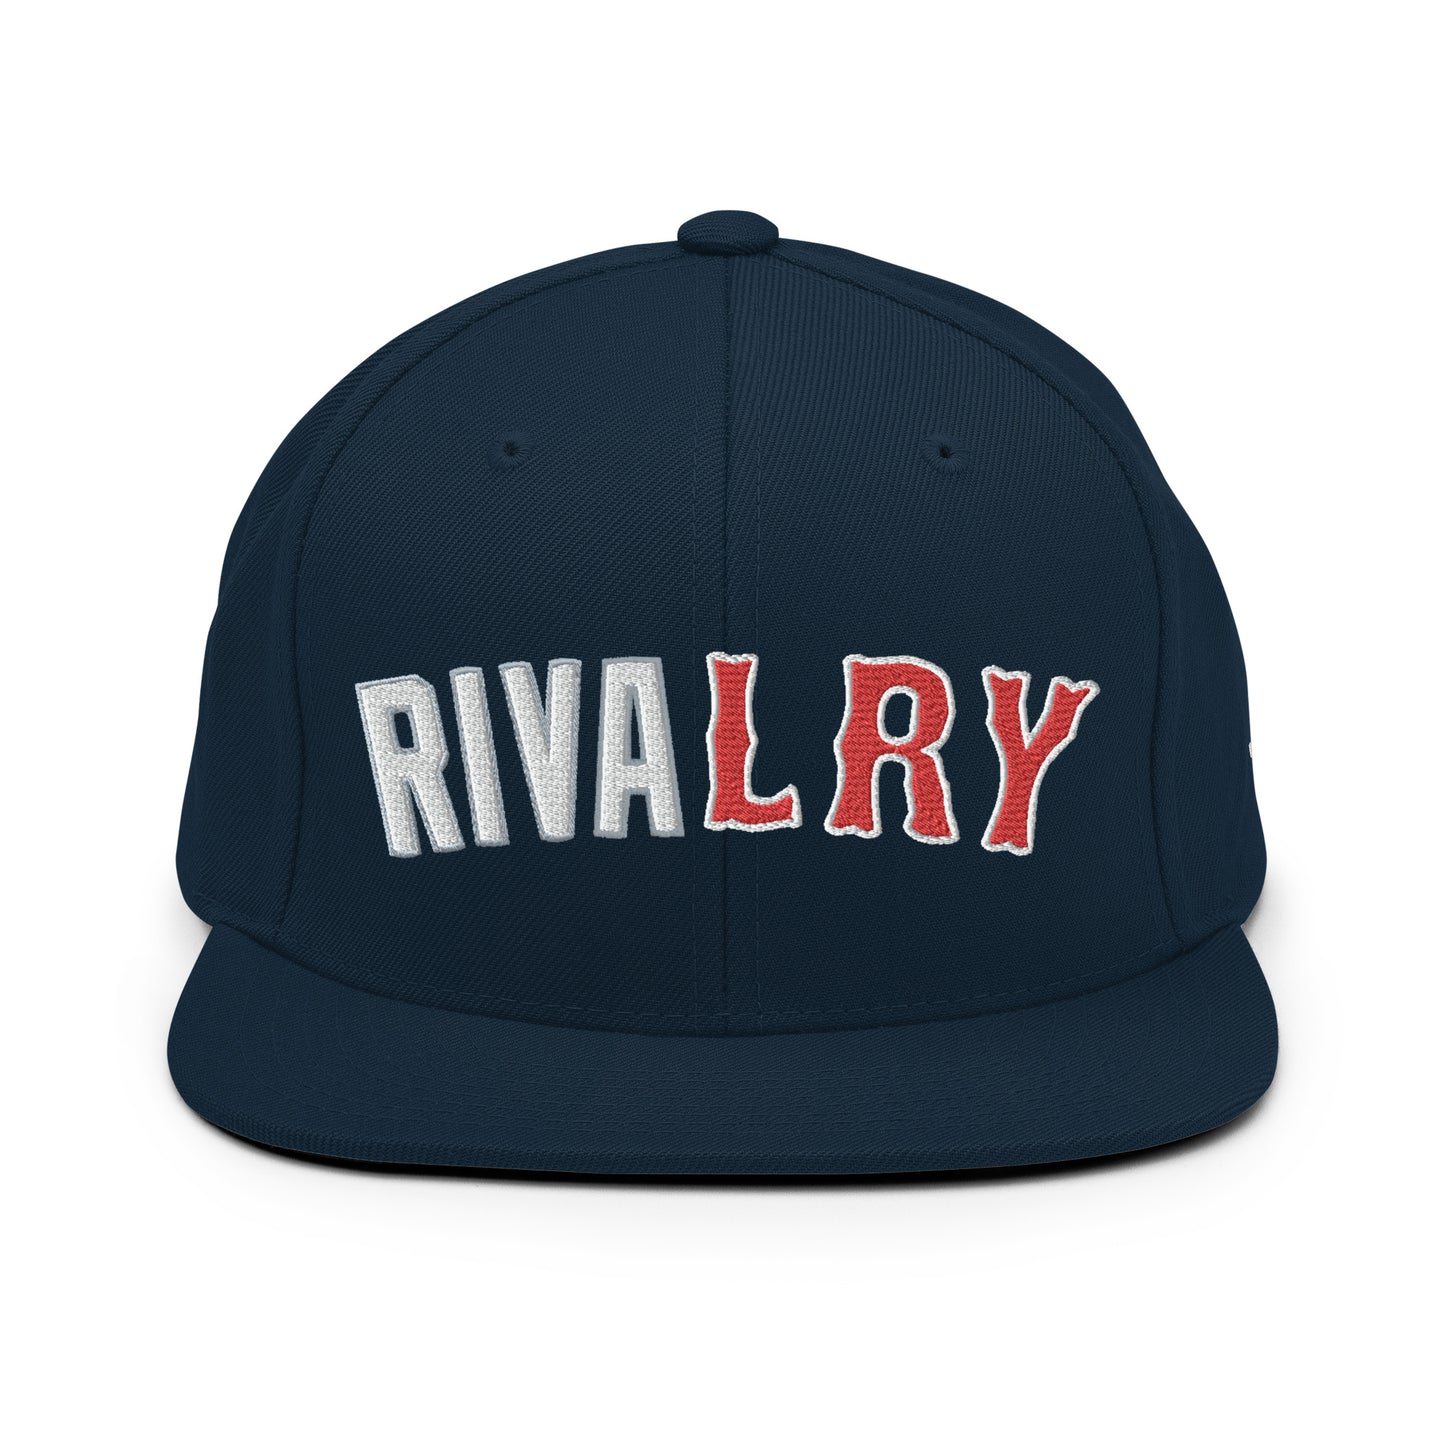 The Rivalry | Snapback Hat